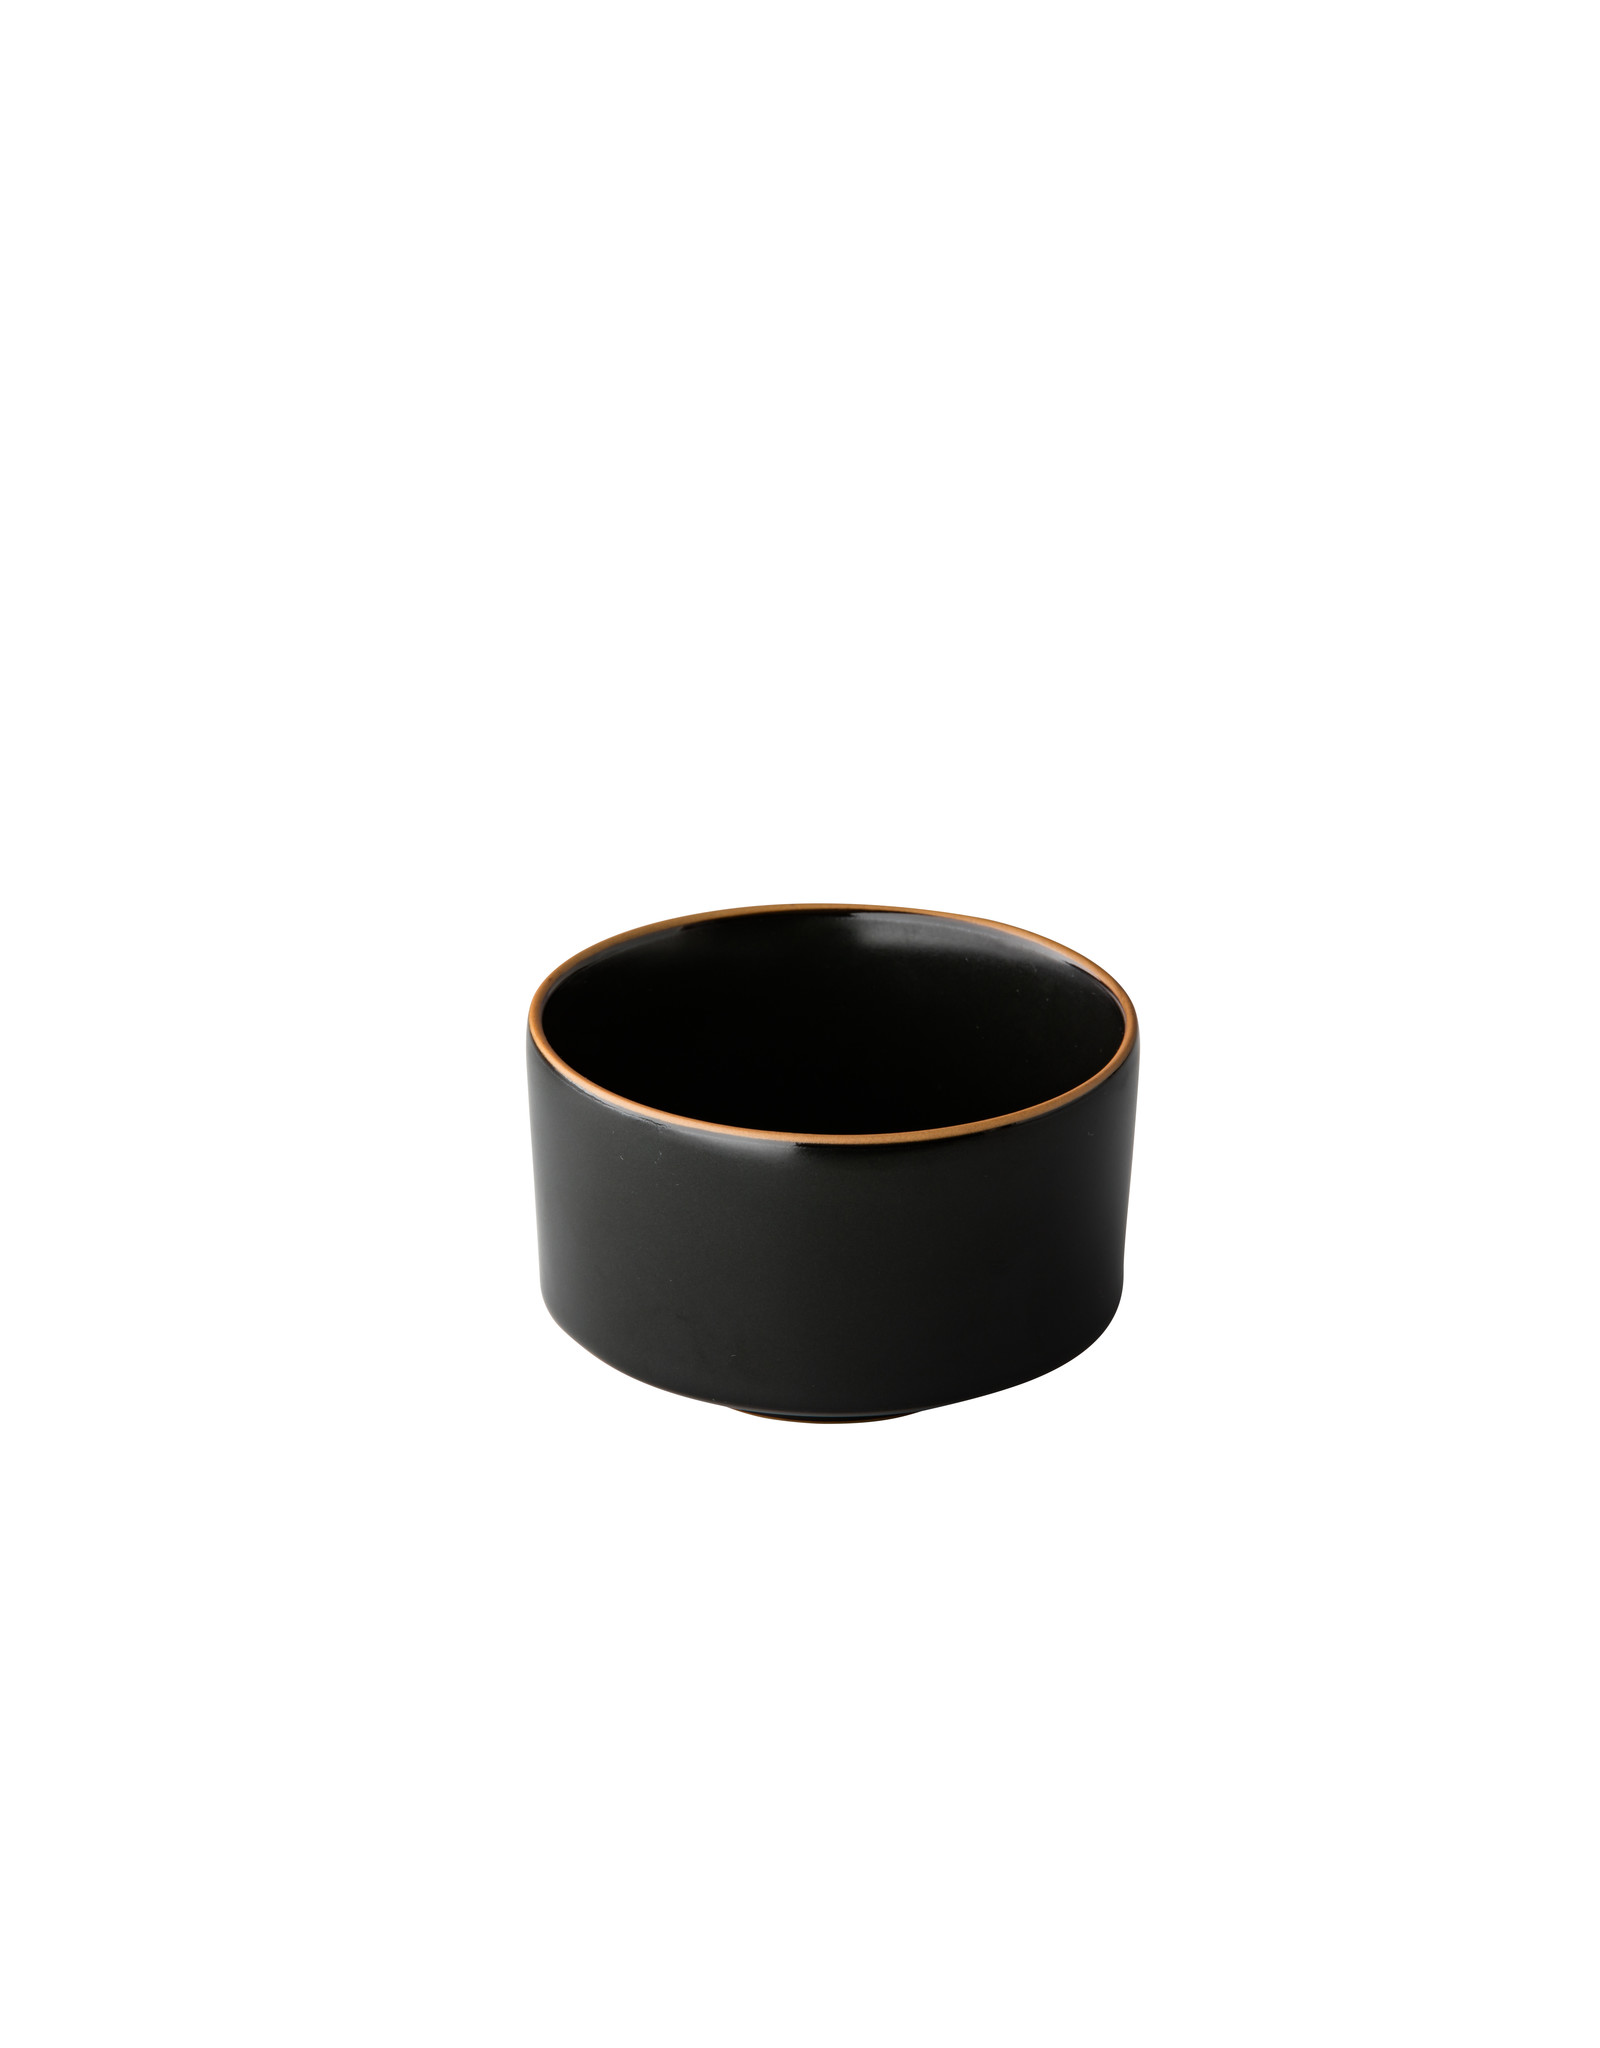 Stylepoint Bowl Japan black 10,5cm